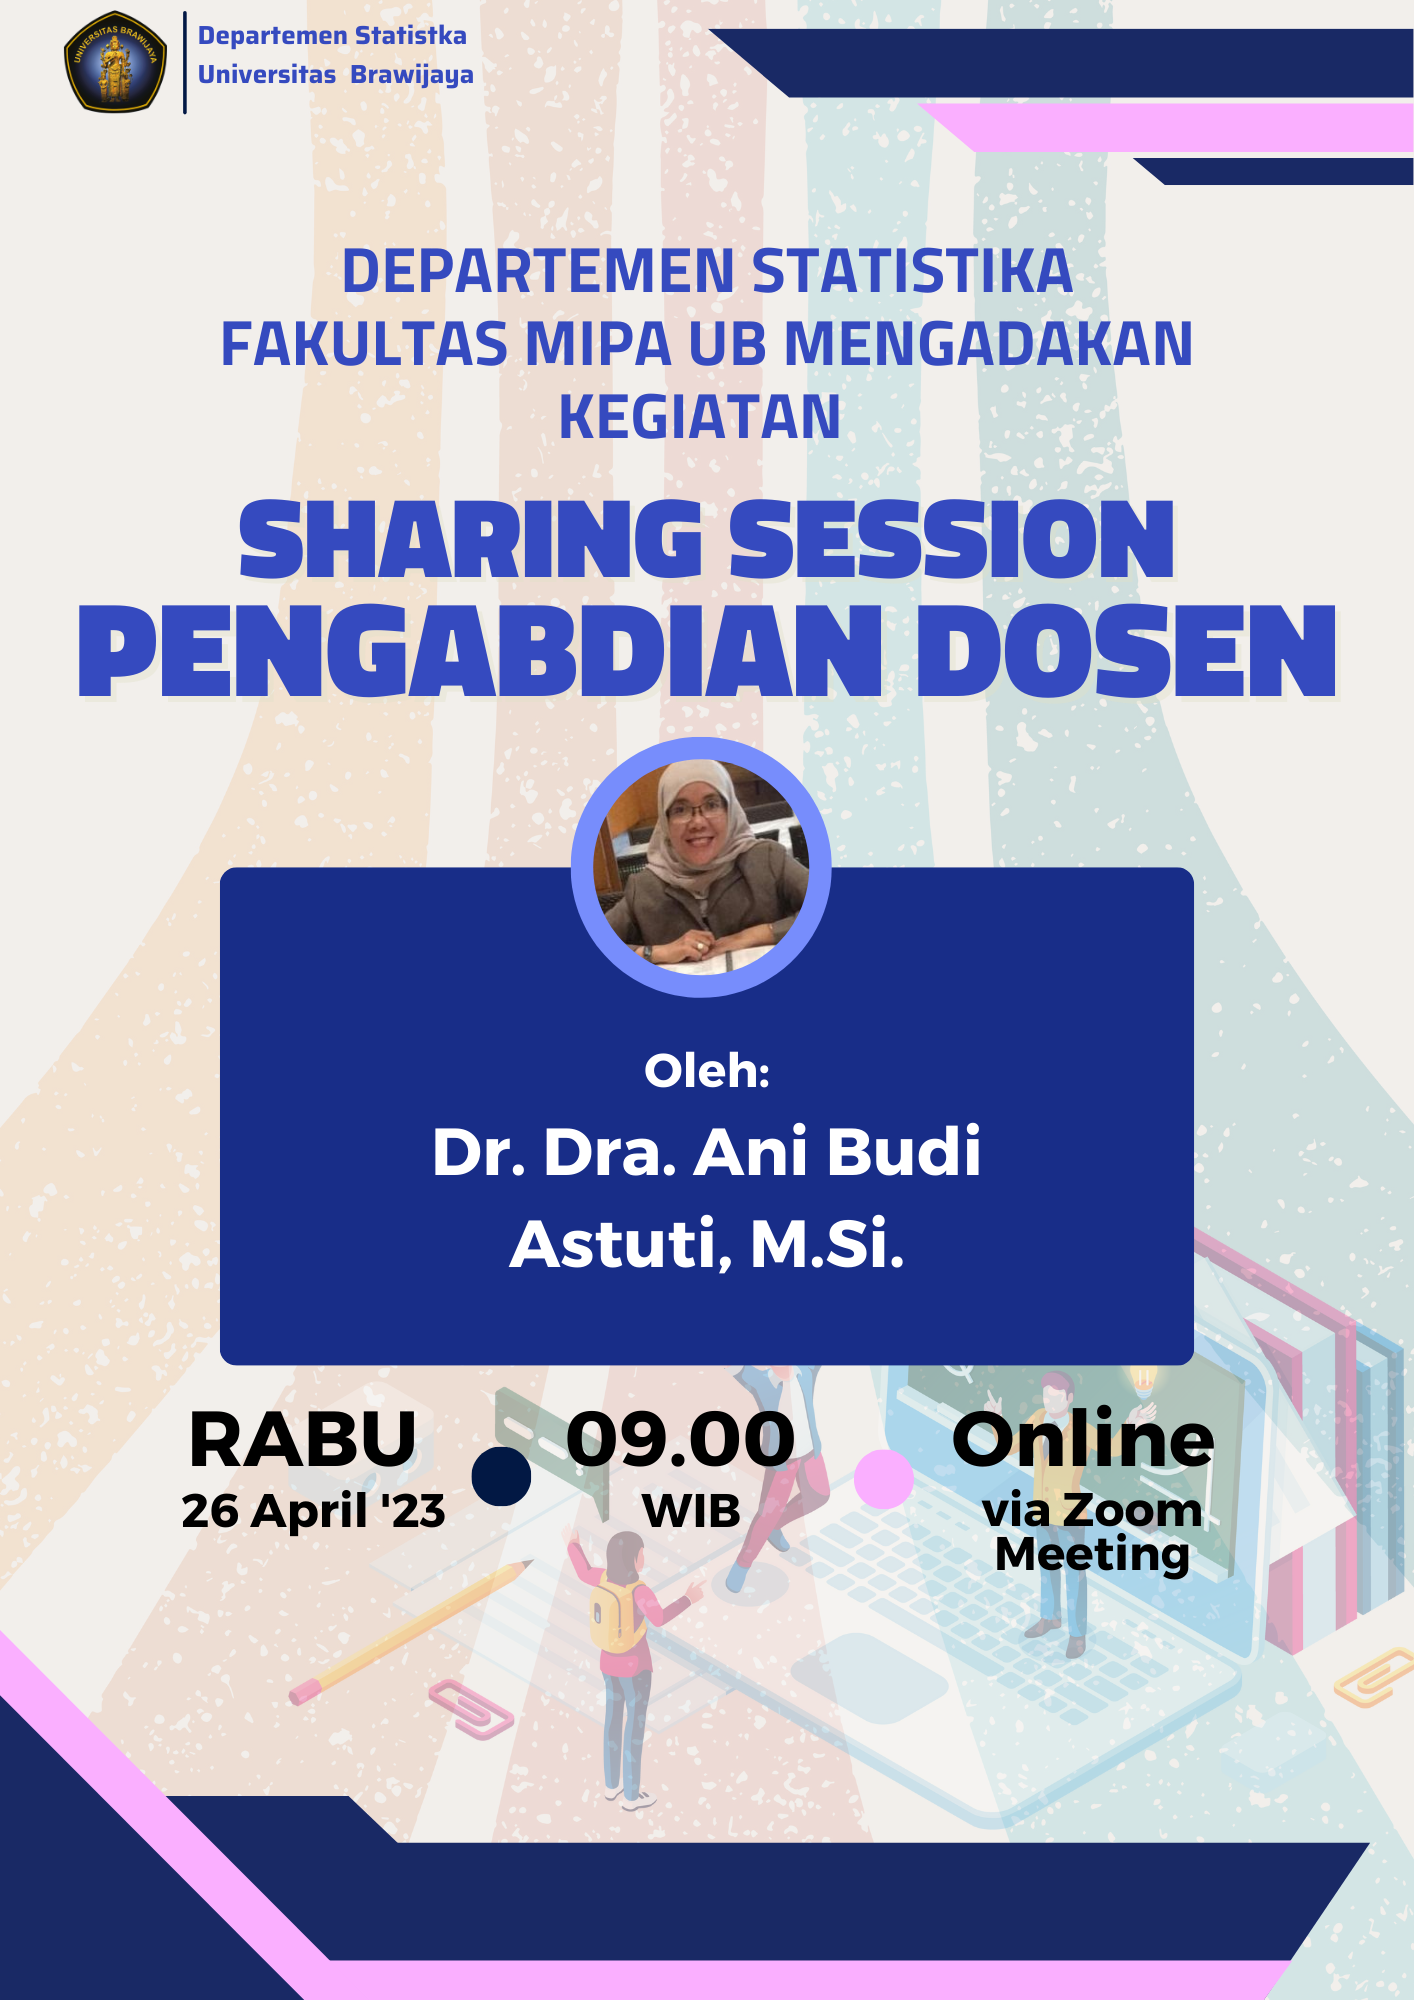 Sharing Session Pengabdian Dosen oleh Dr. Dra. Ani Budi Astuti, M.Si.